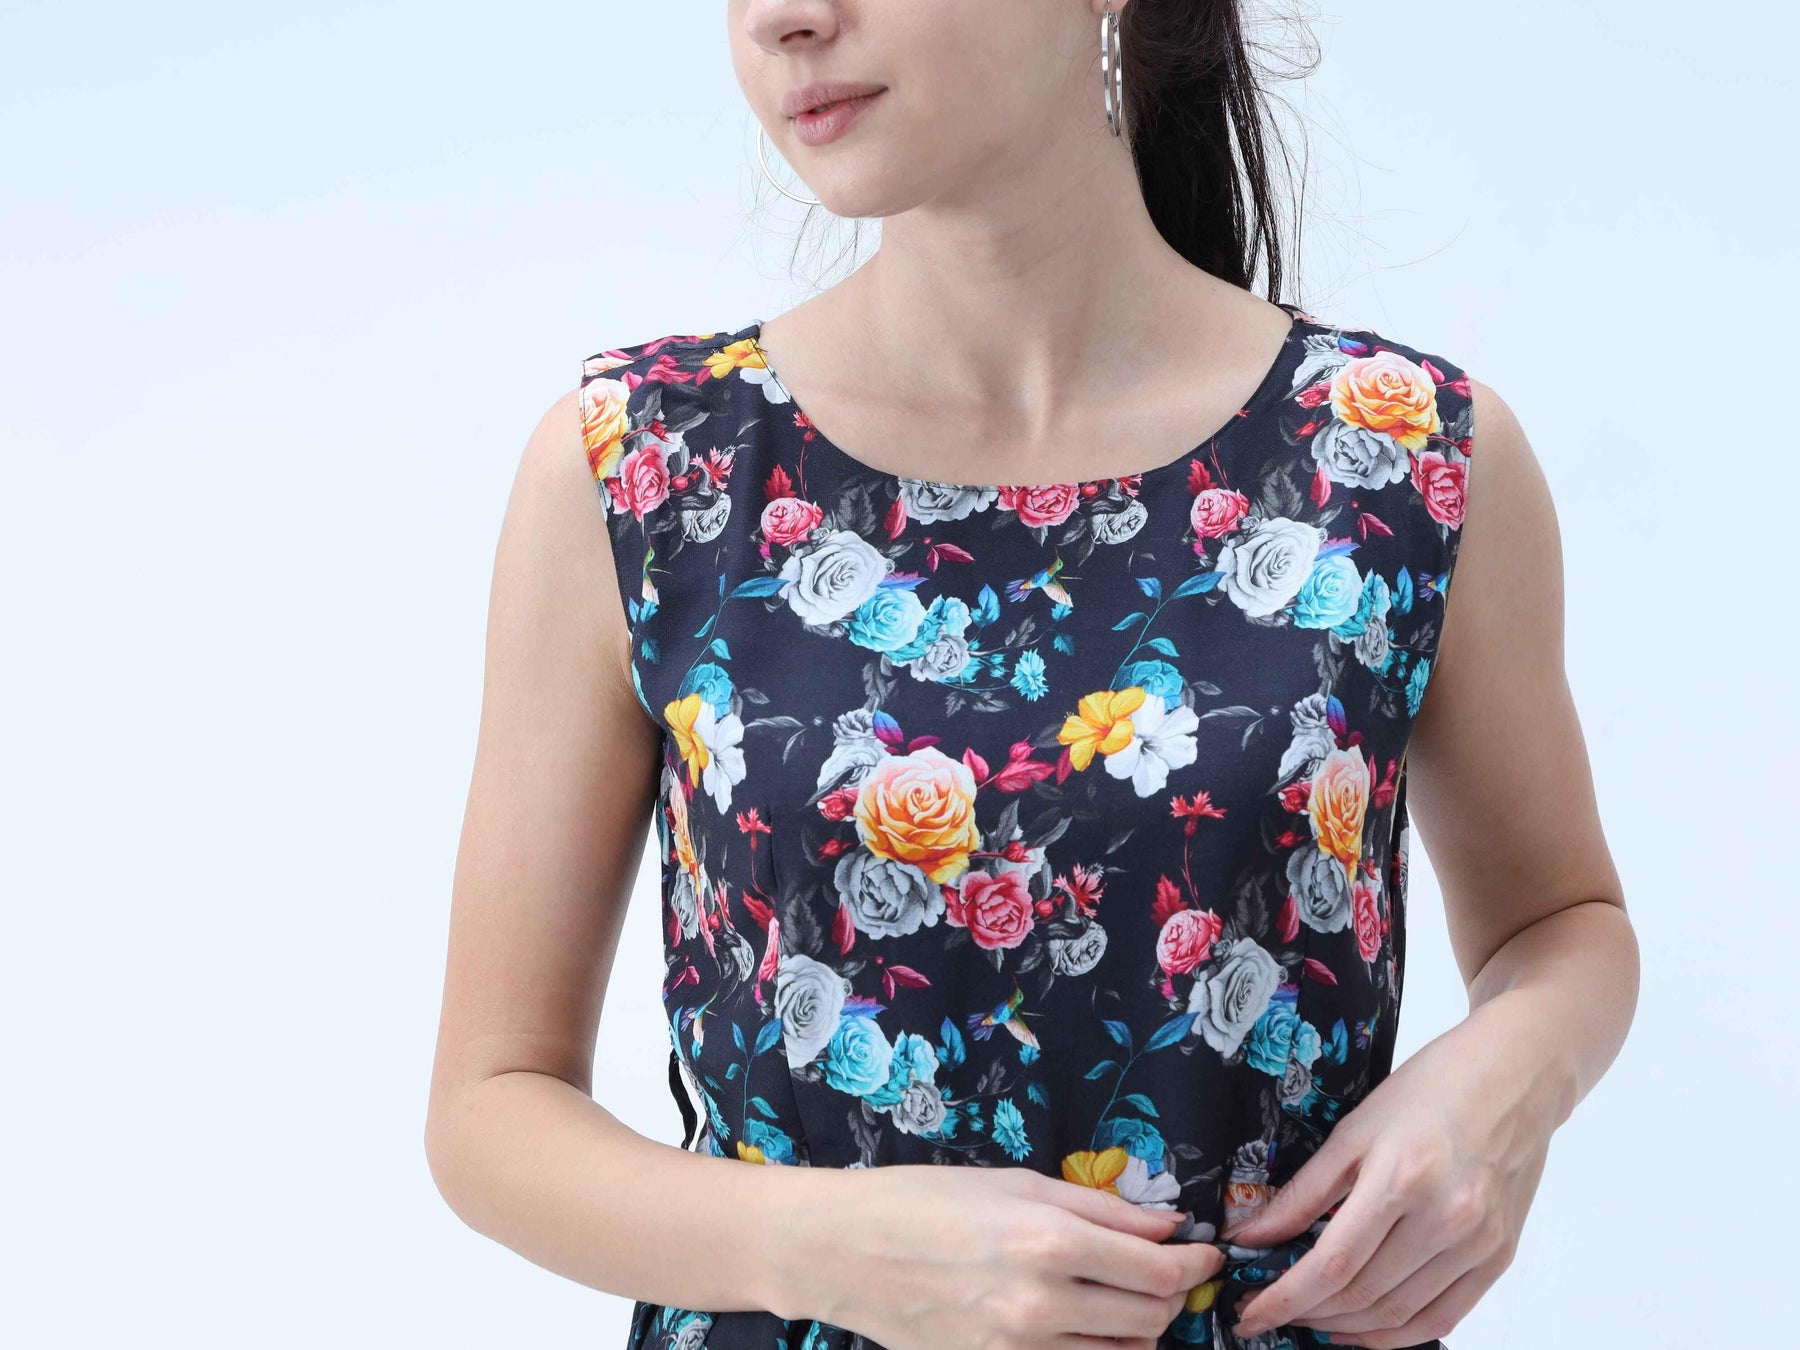 Floral Print Knee Length Dress - Guniaa Fashions